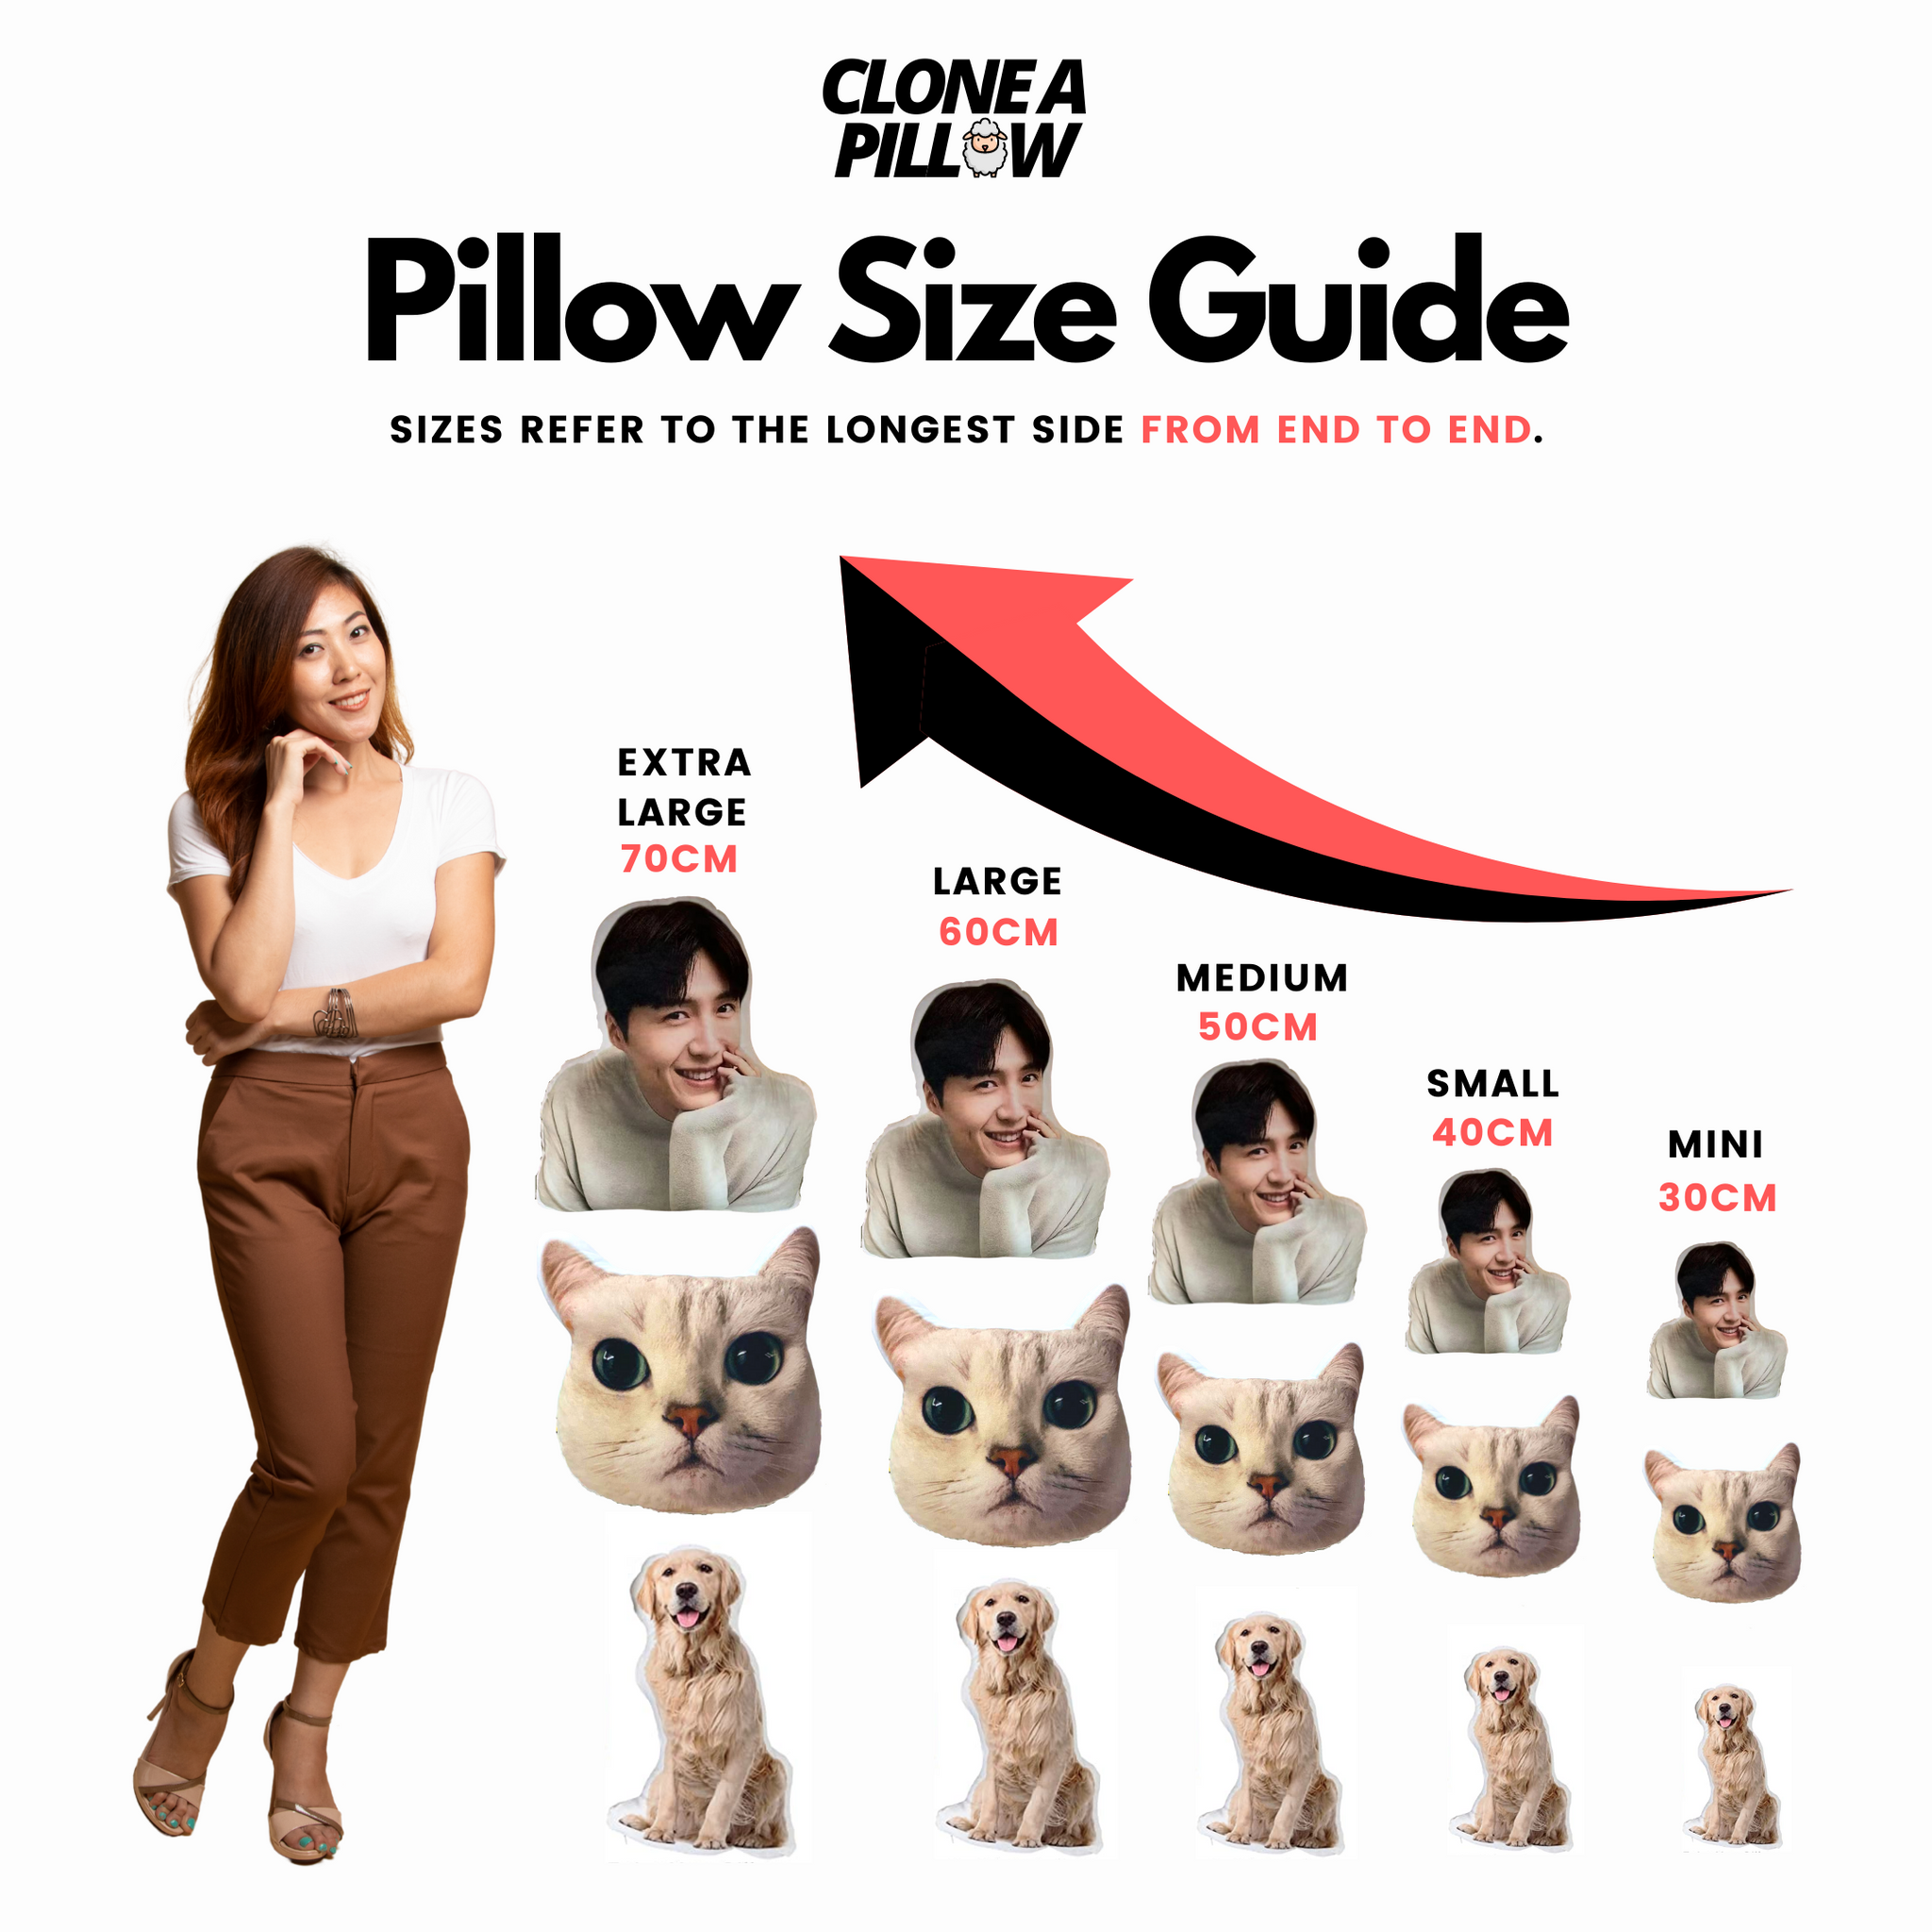 Clone a Celebrity into a Pillow